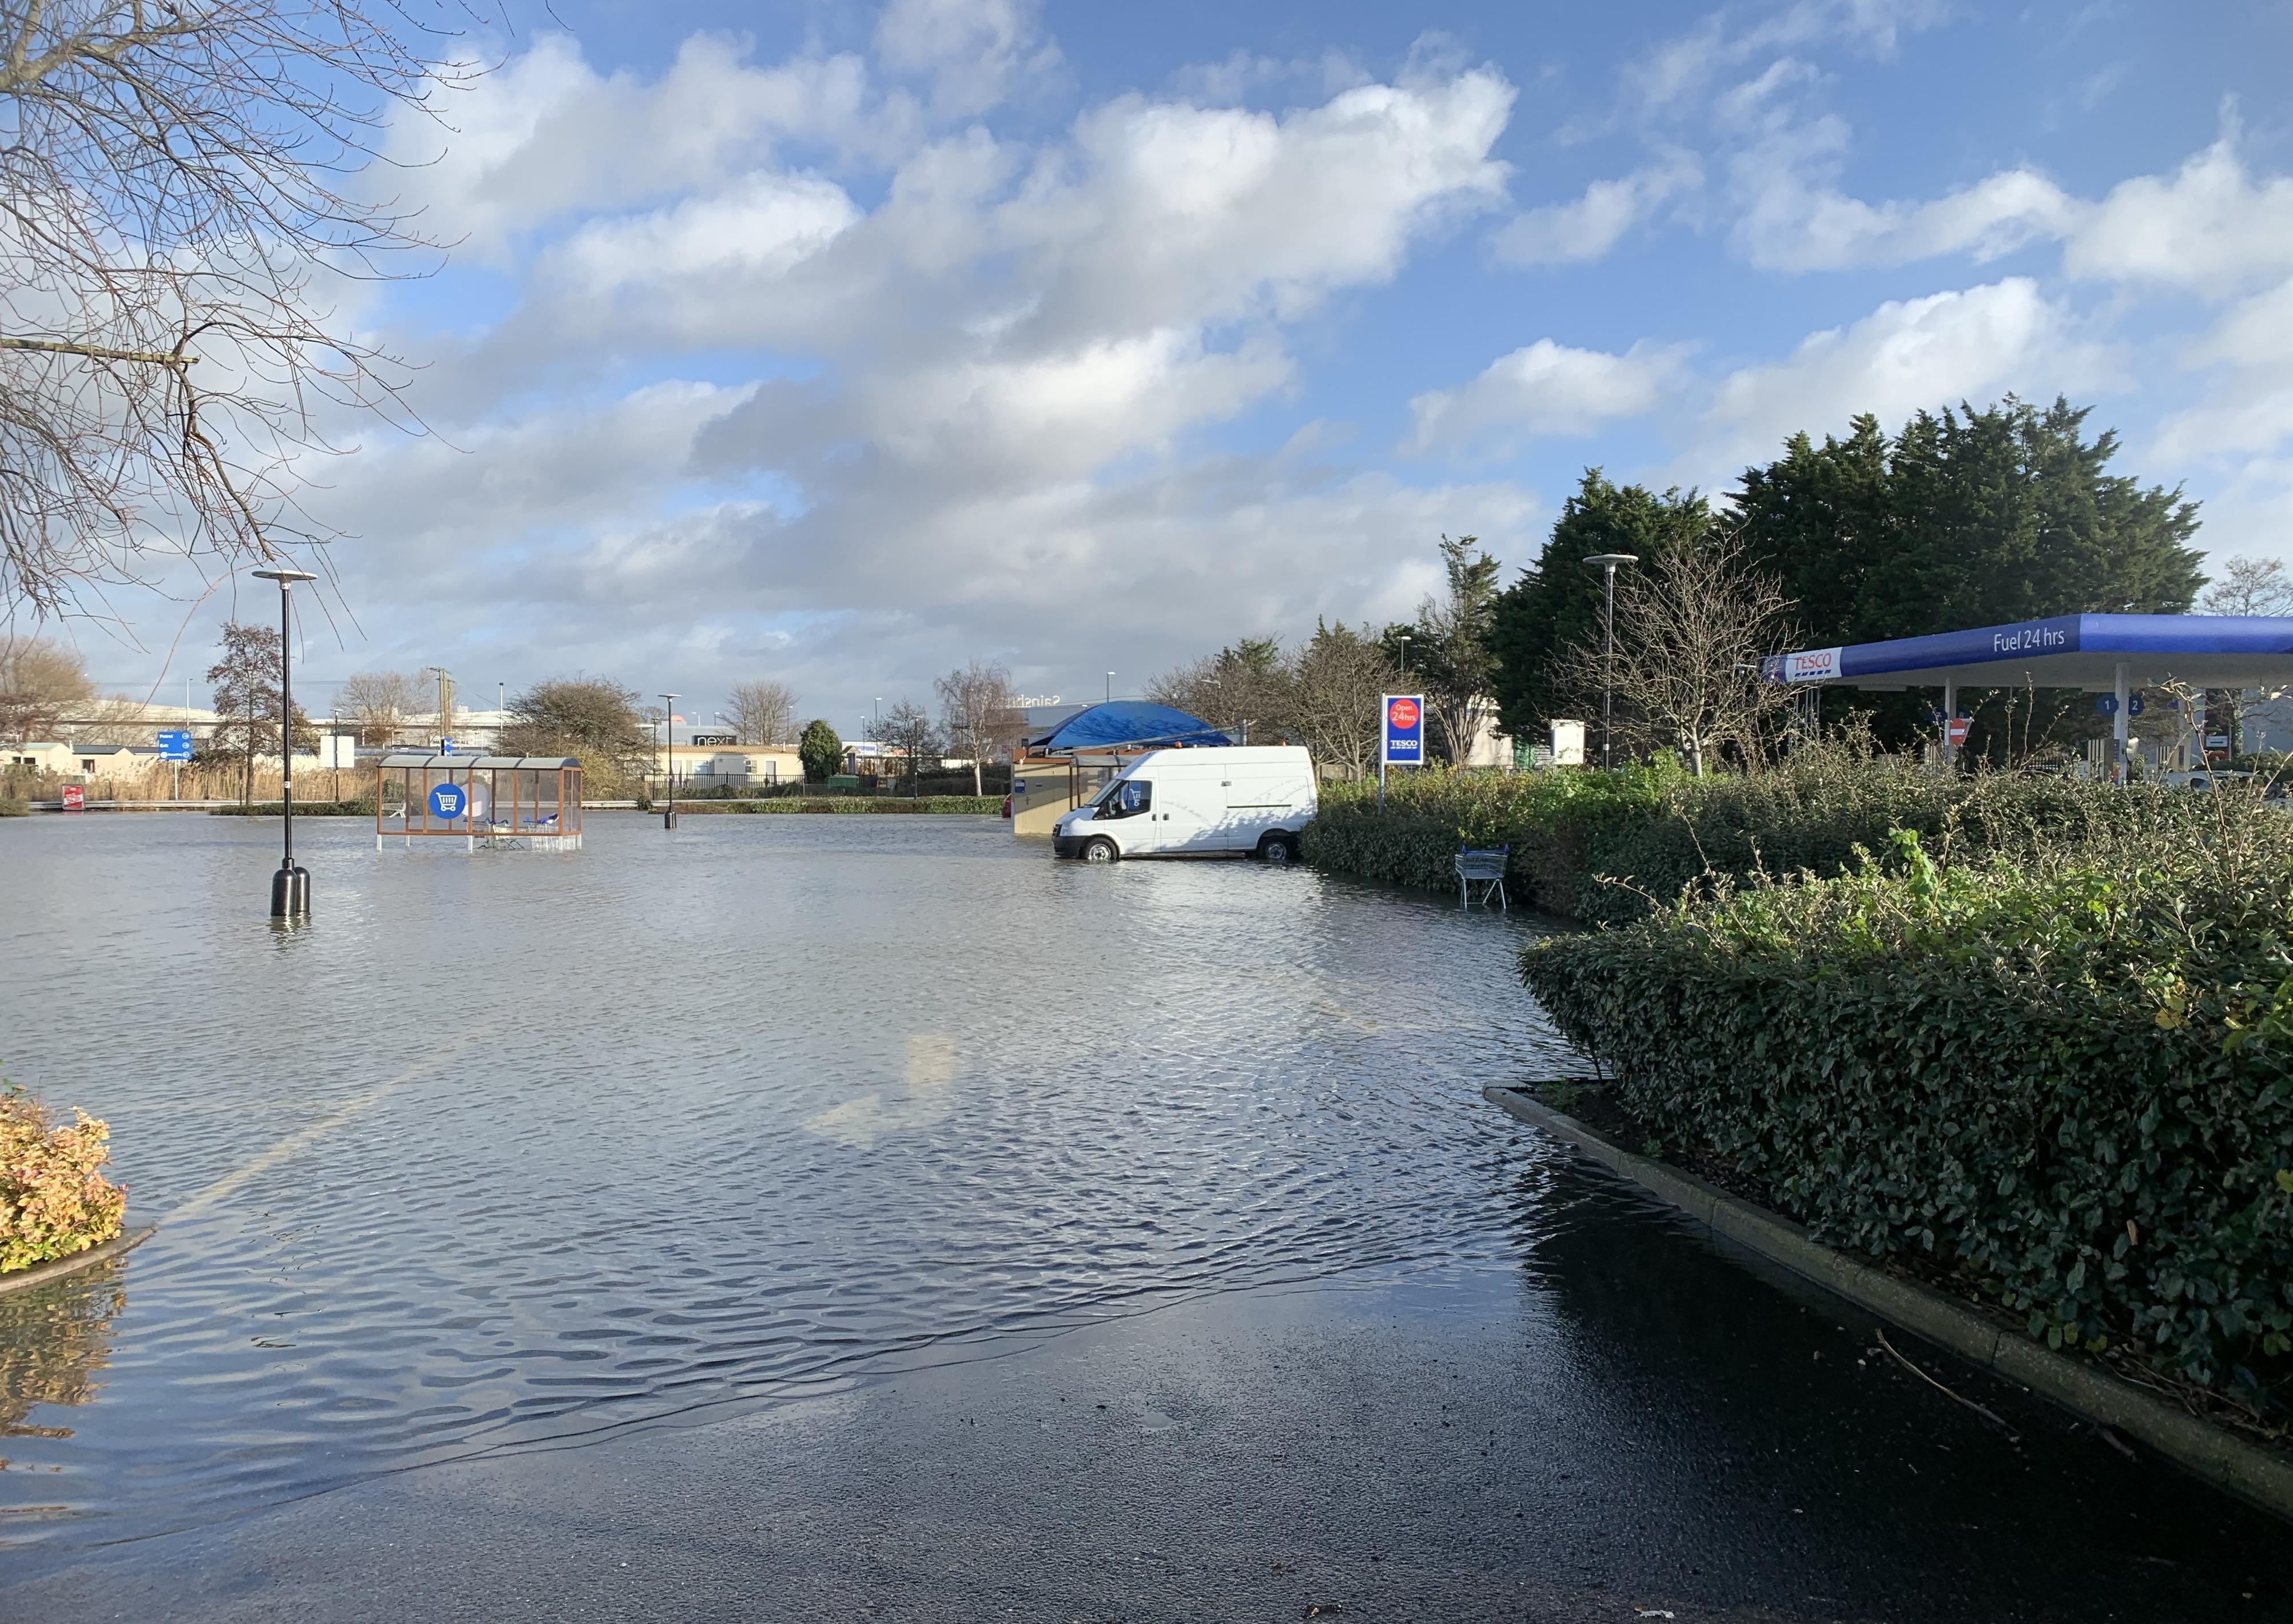 Tesco’s car park in Bognor Regis has been left under water after more flooding over the weekend. SUS-191223-143507001